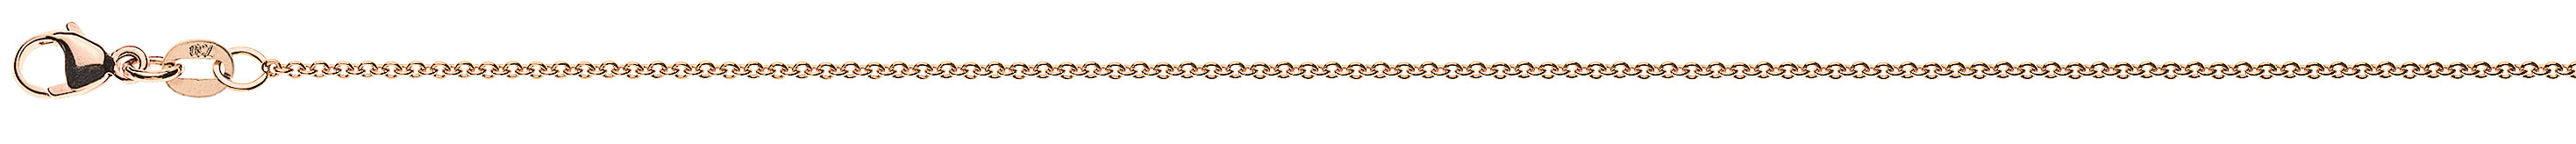 AURONOS Prestige Necklace Rose Gold 18K Round Anchor 42cm 1.3mm